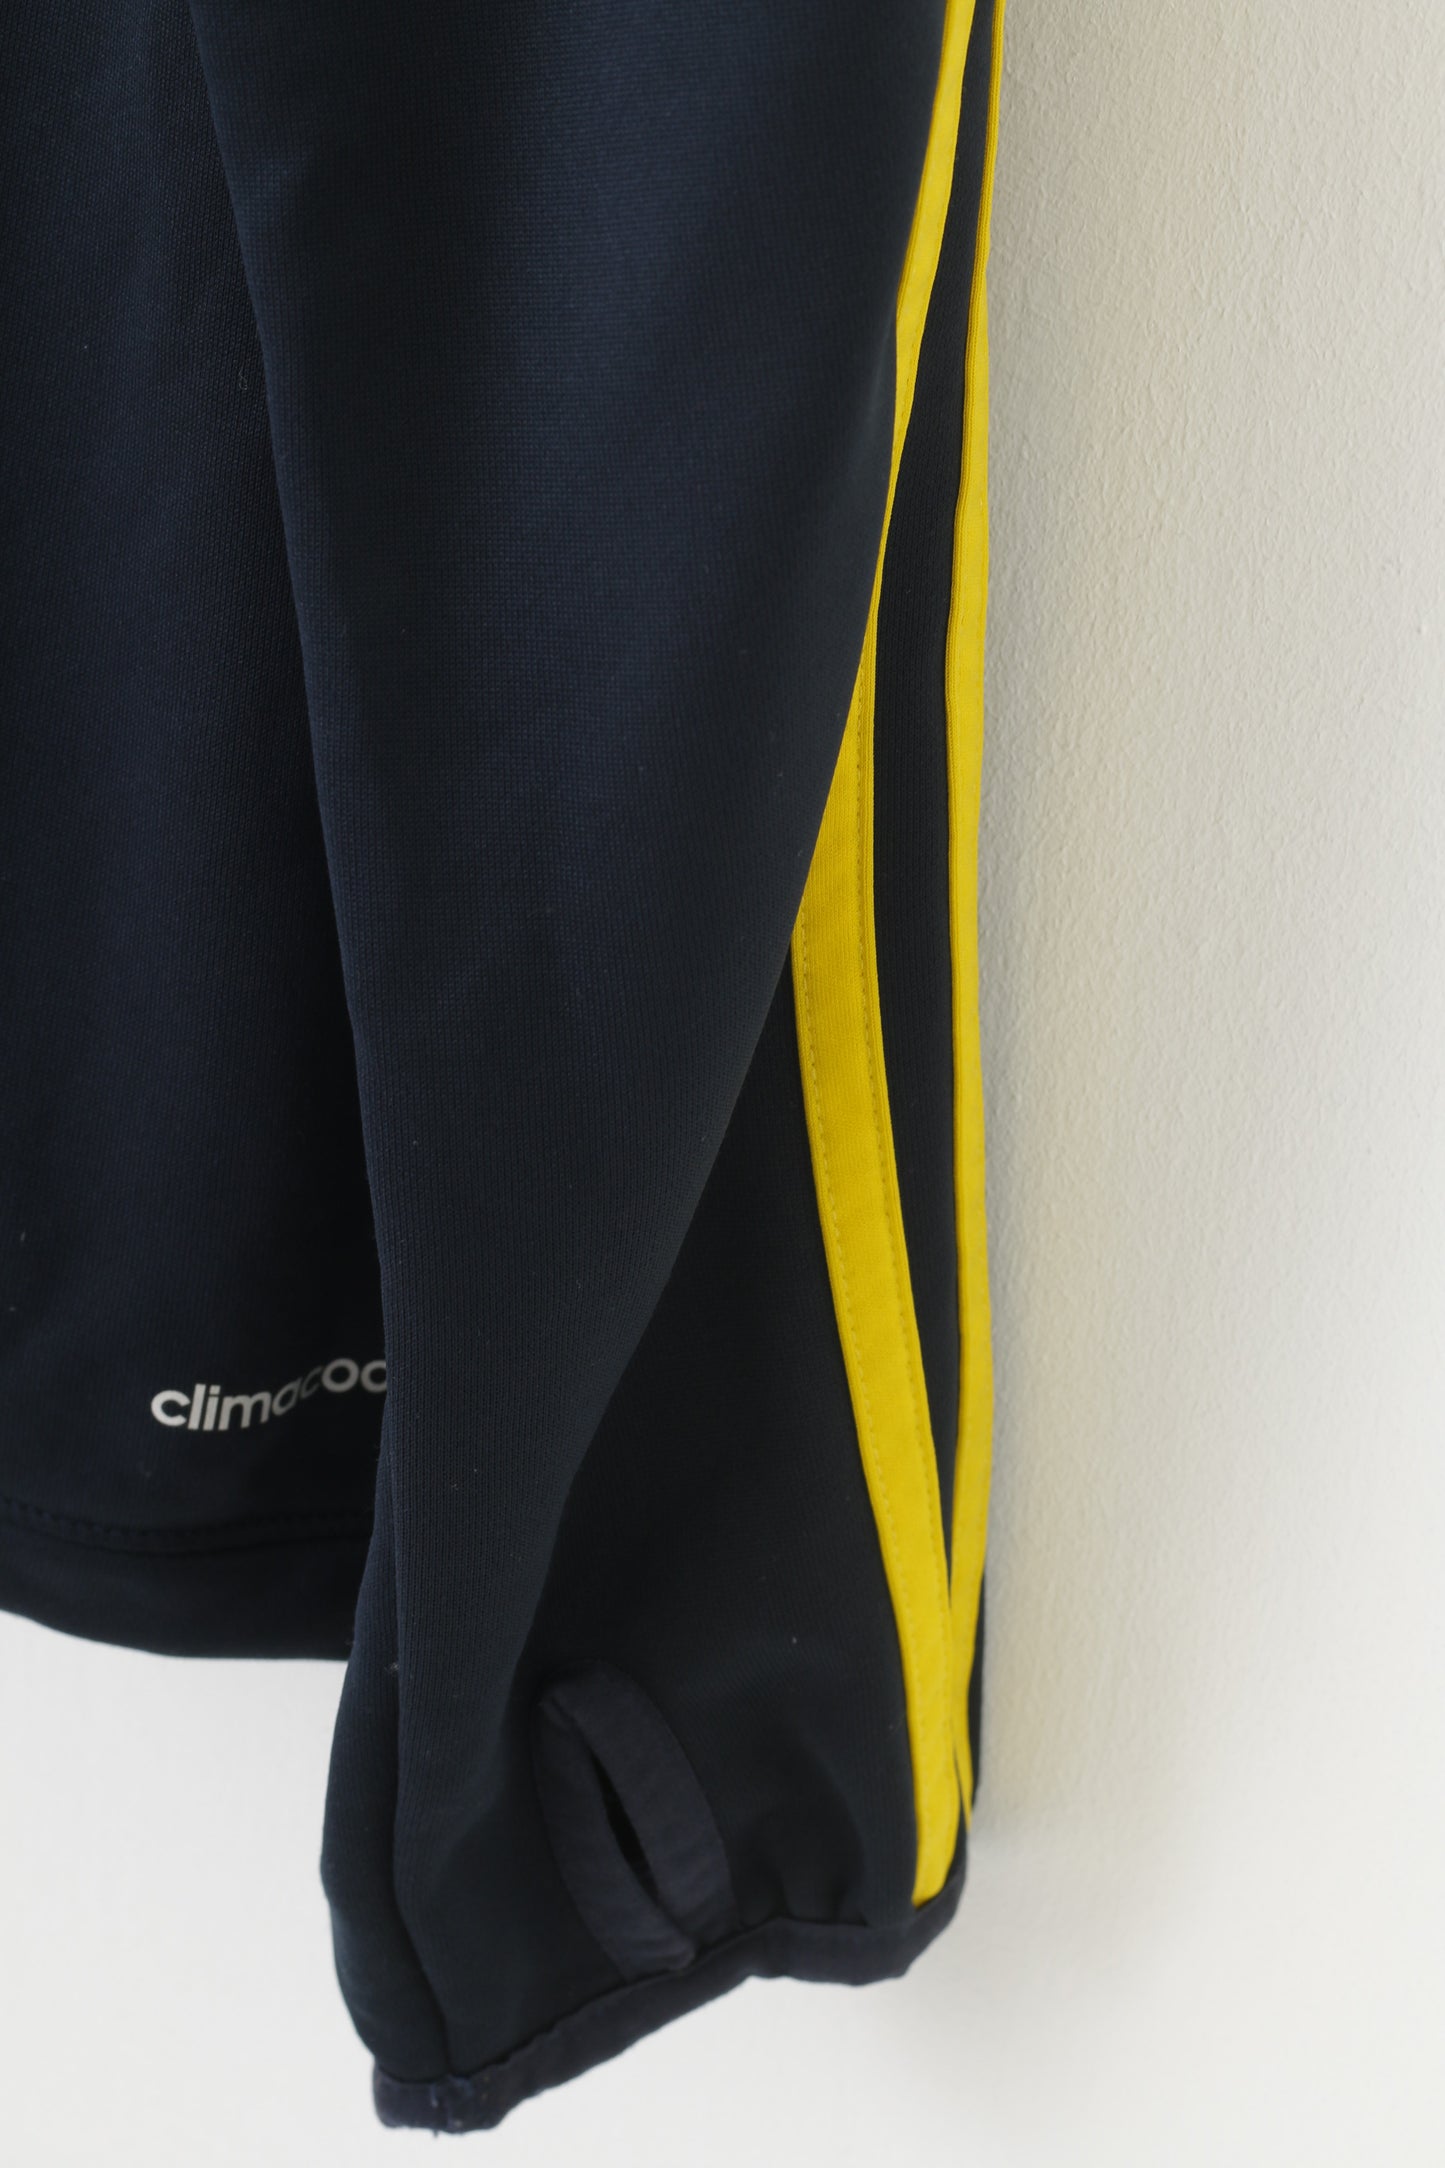 Adidas Men M Sweatshirt Sport Zip Neck Climacool Navy Fotboll SvFF Training 3 Stripes Vintage Top